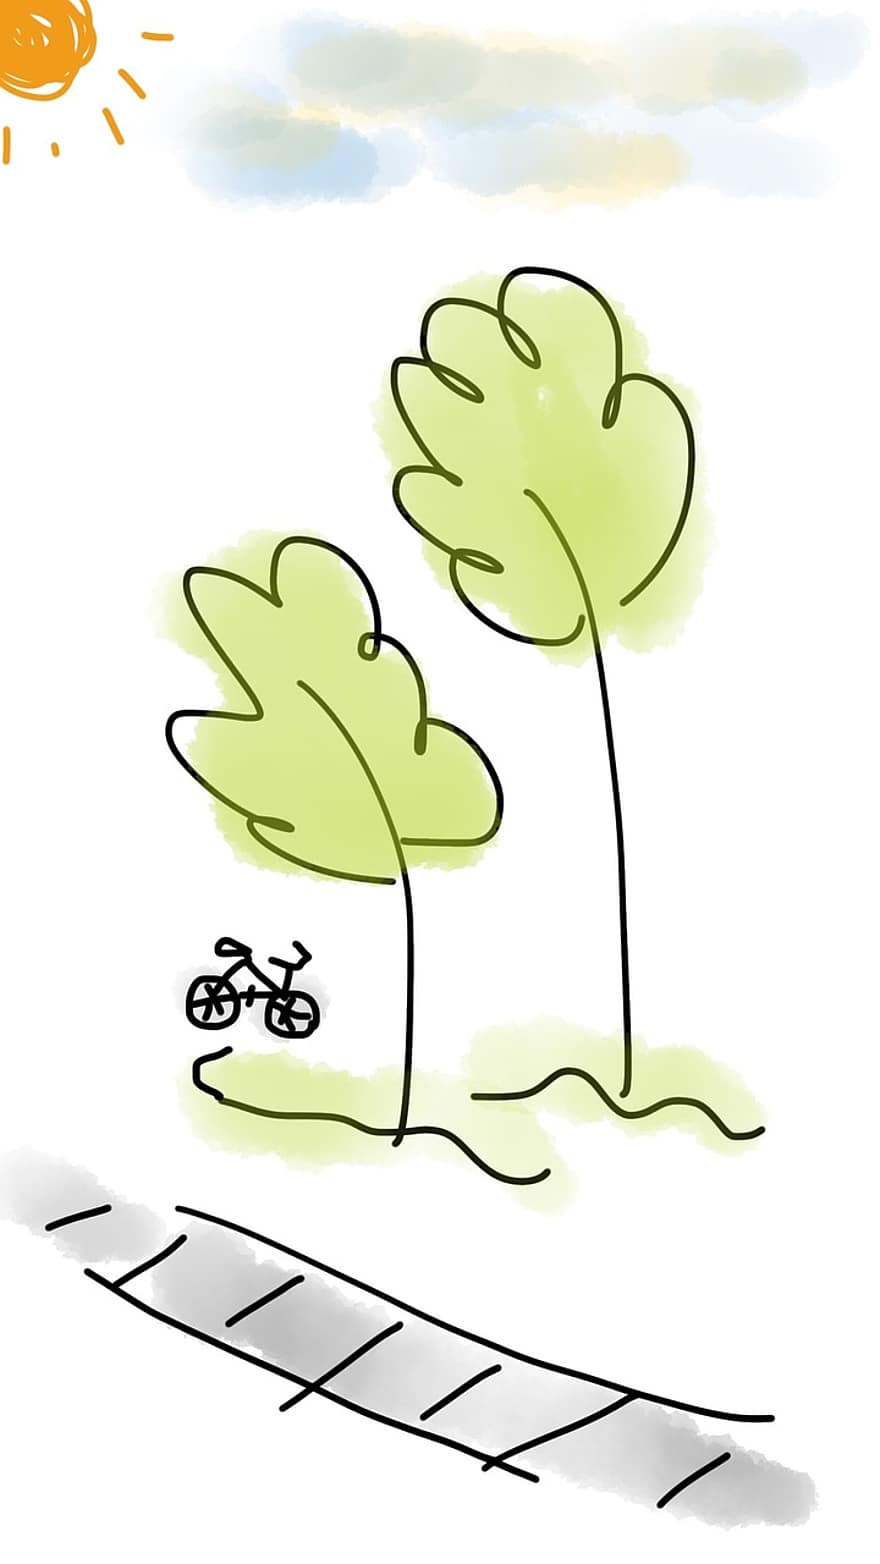 Bicycle, Tree, Outdoor, Green, Trail, Sport, Bike, Road, Activity, Biking, Sun